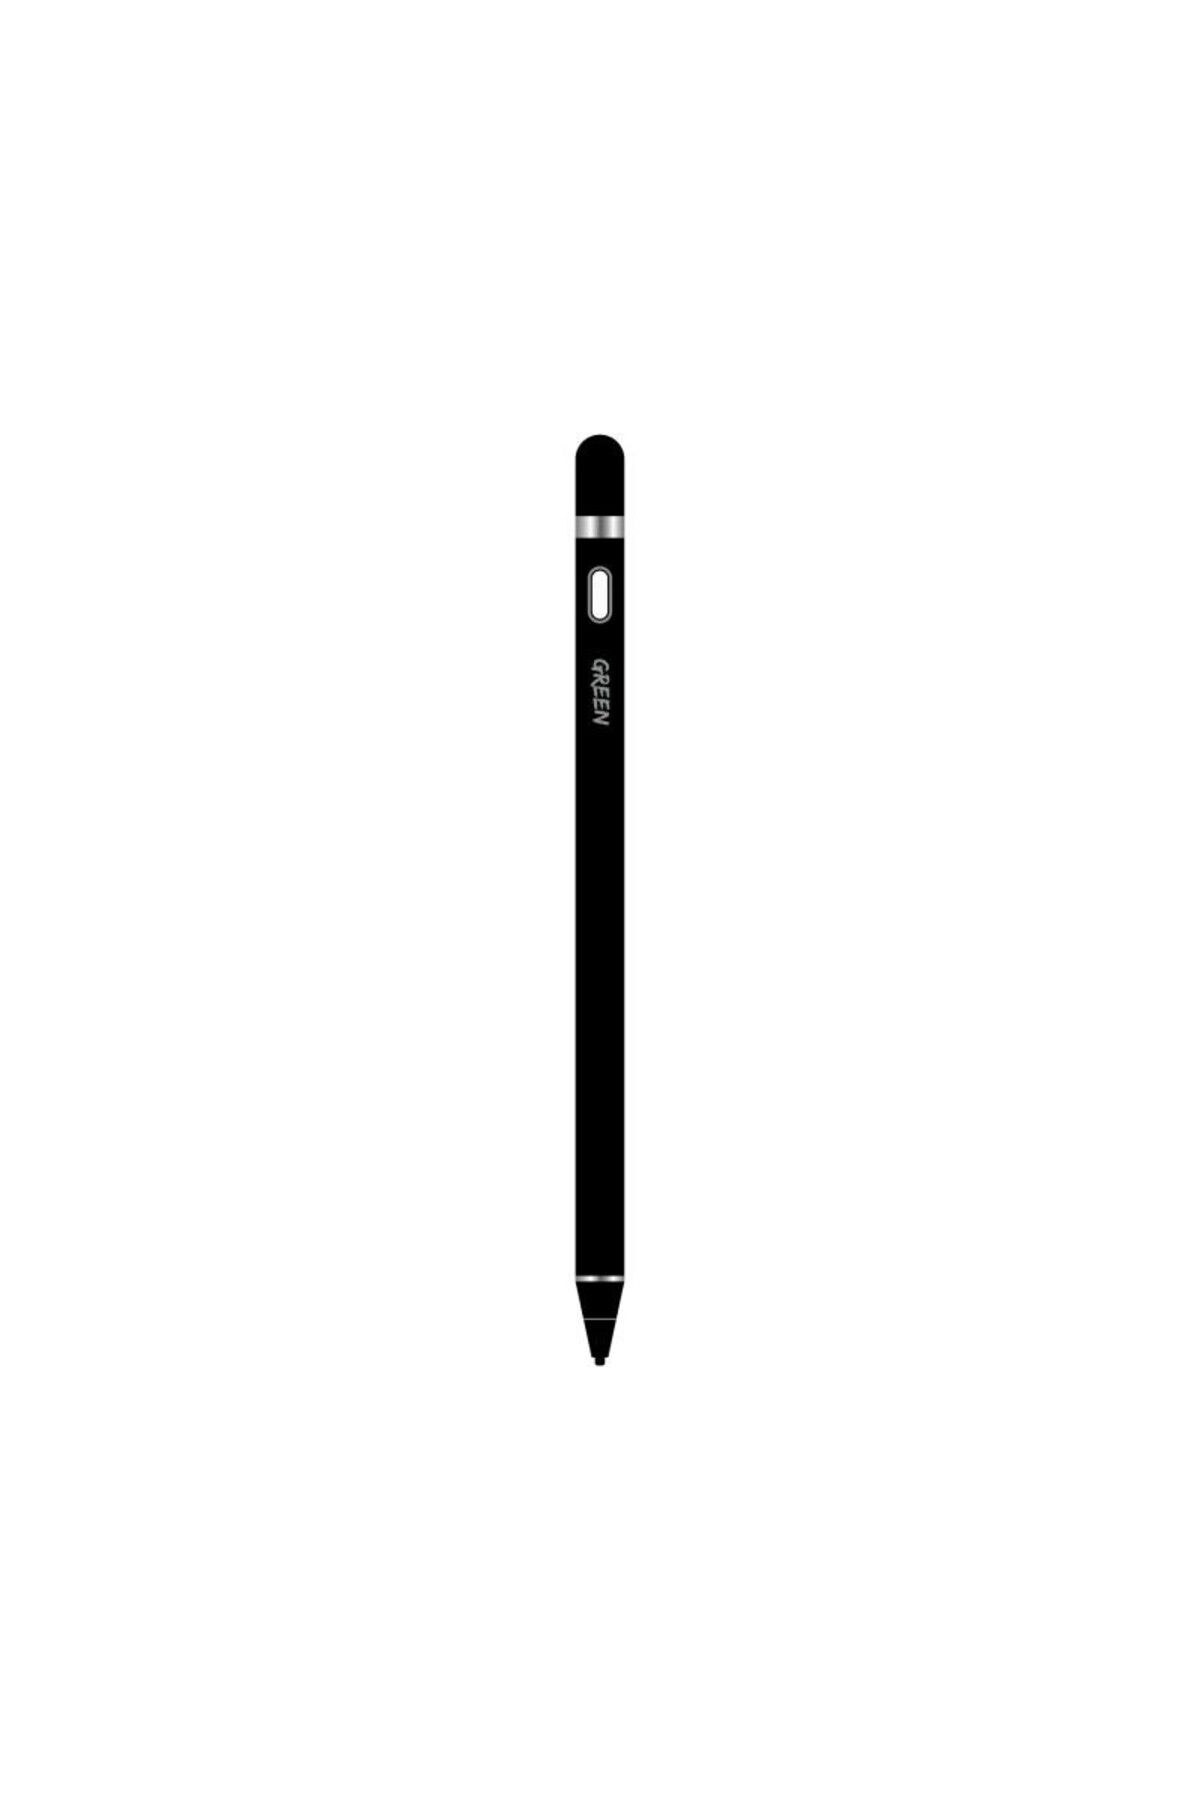 Green Lion Dokunmatik Kalem Touch Screen Stylus Pen With 100mah, 1.45mm Soft Fine Tip